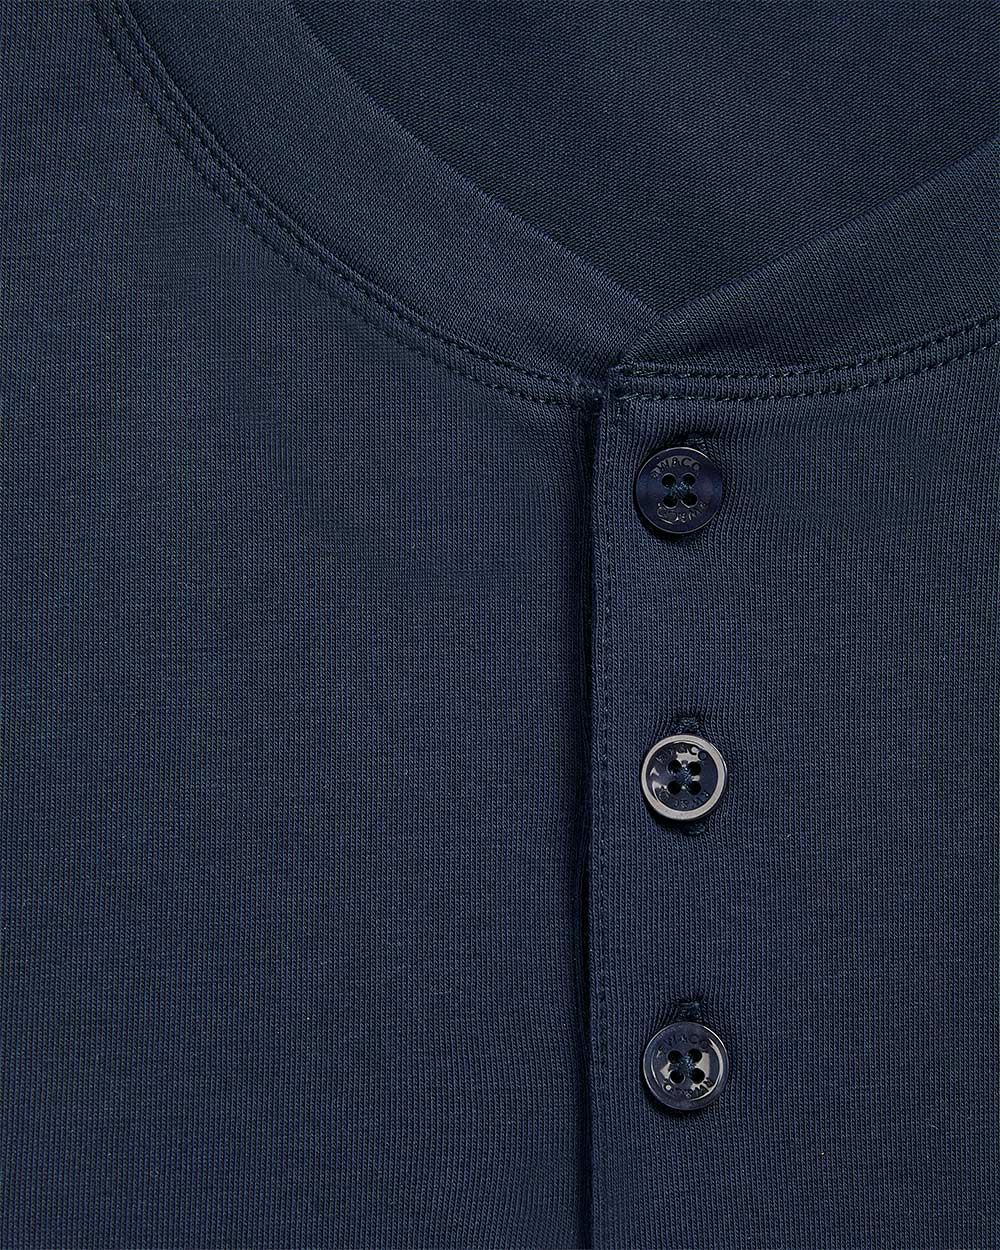 Supima Cotton (R) Henley Short Sleeve T-Shirt